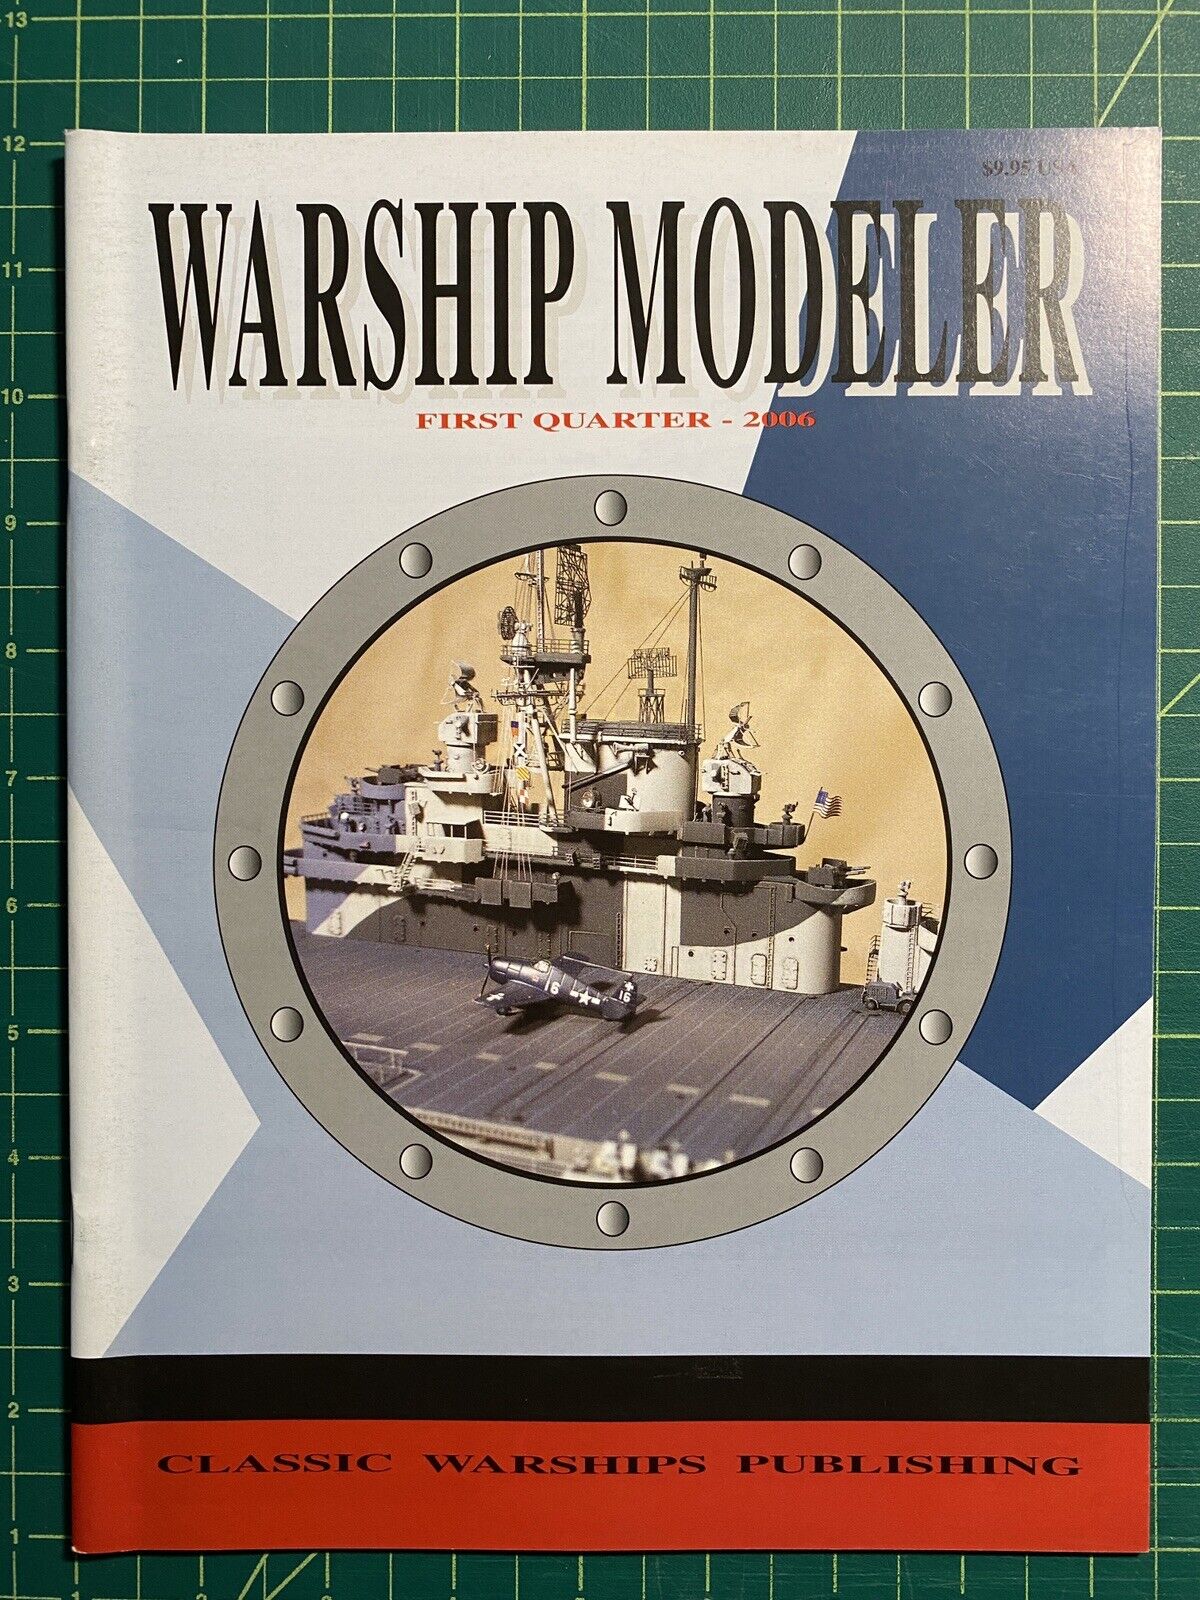 Classic Warships Publishing Warship Modeler 1st Quarter Issue Model Pictorial